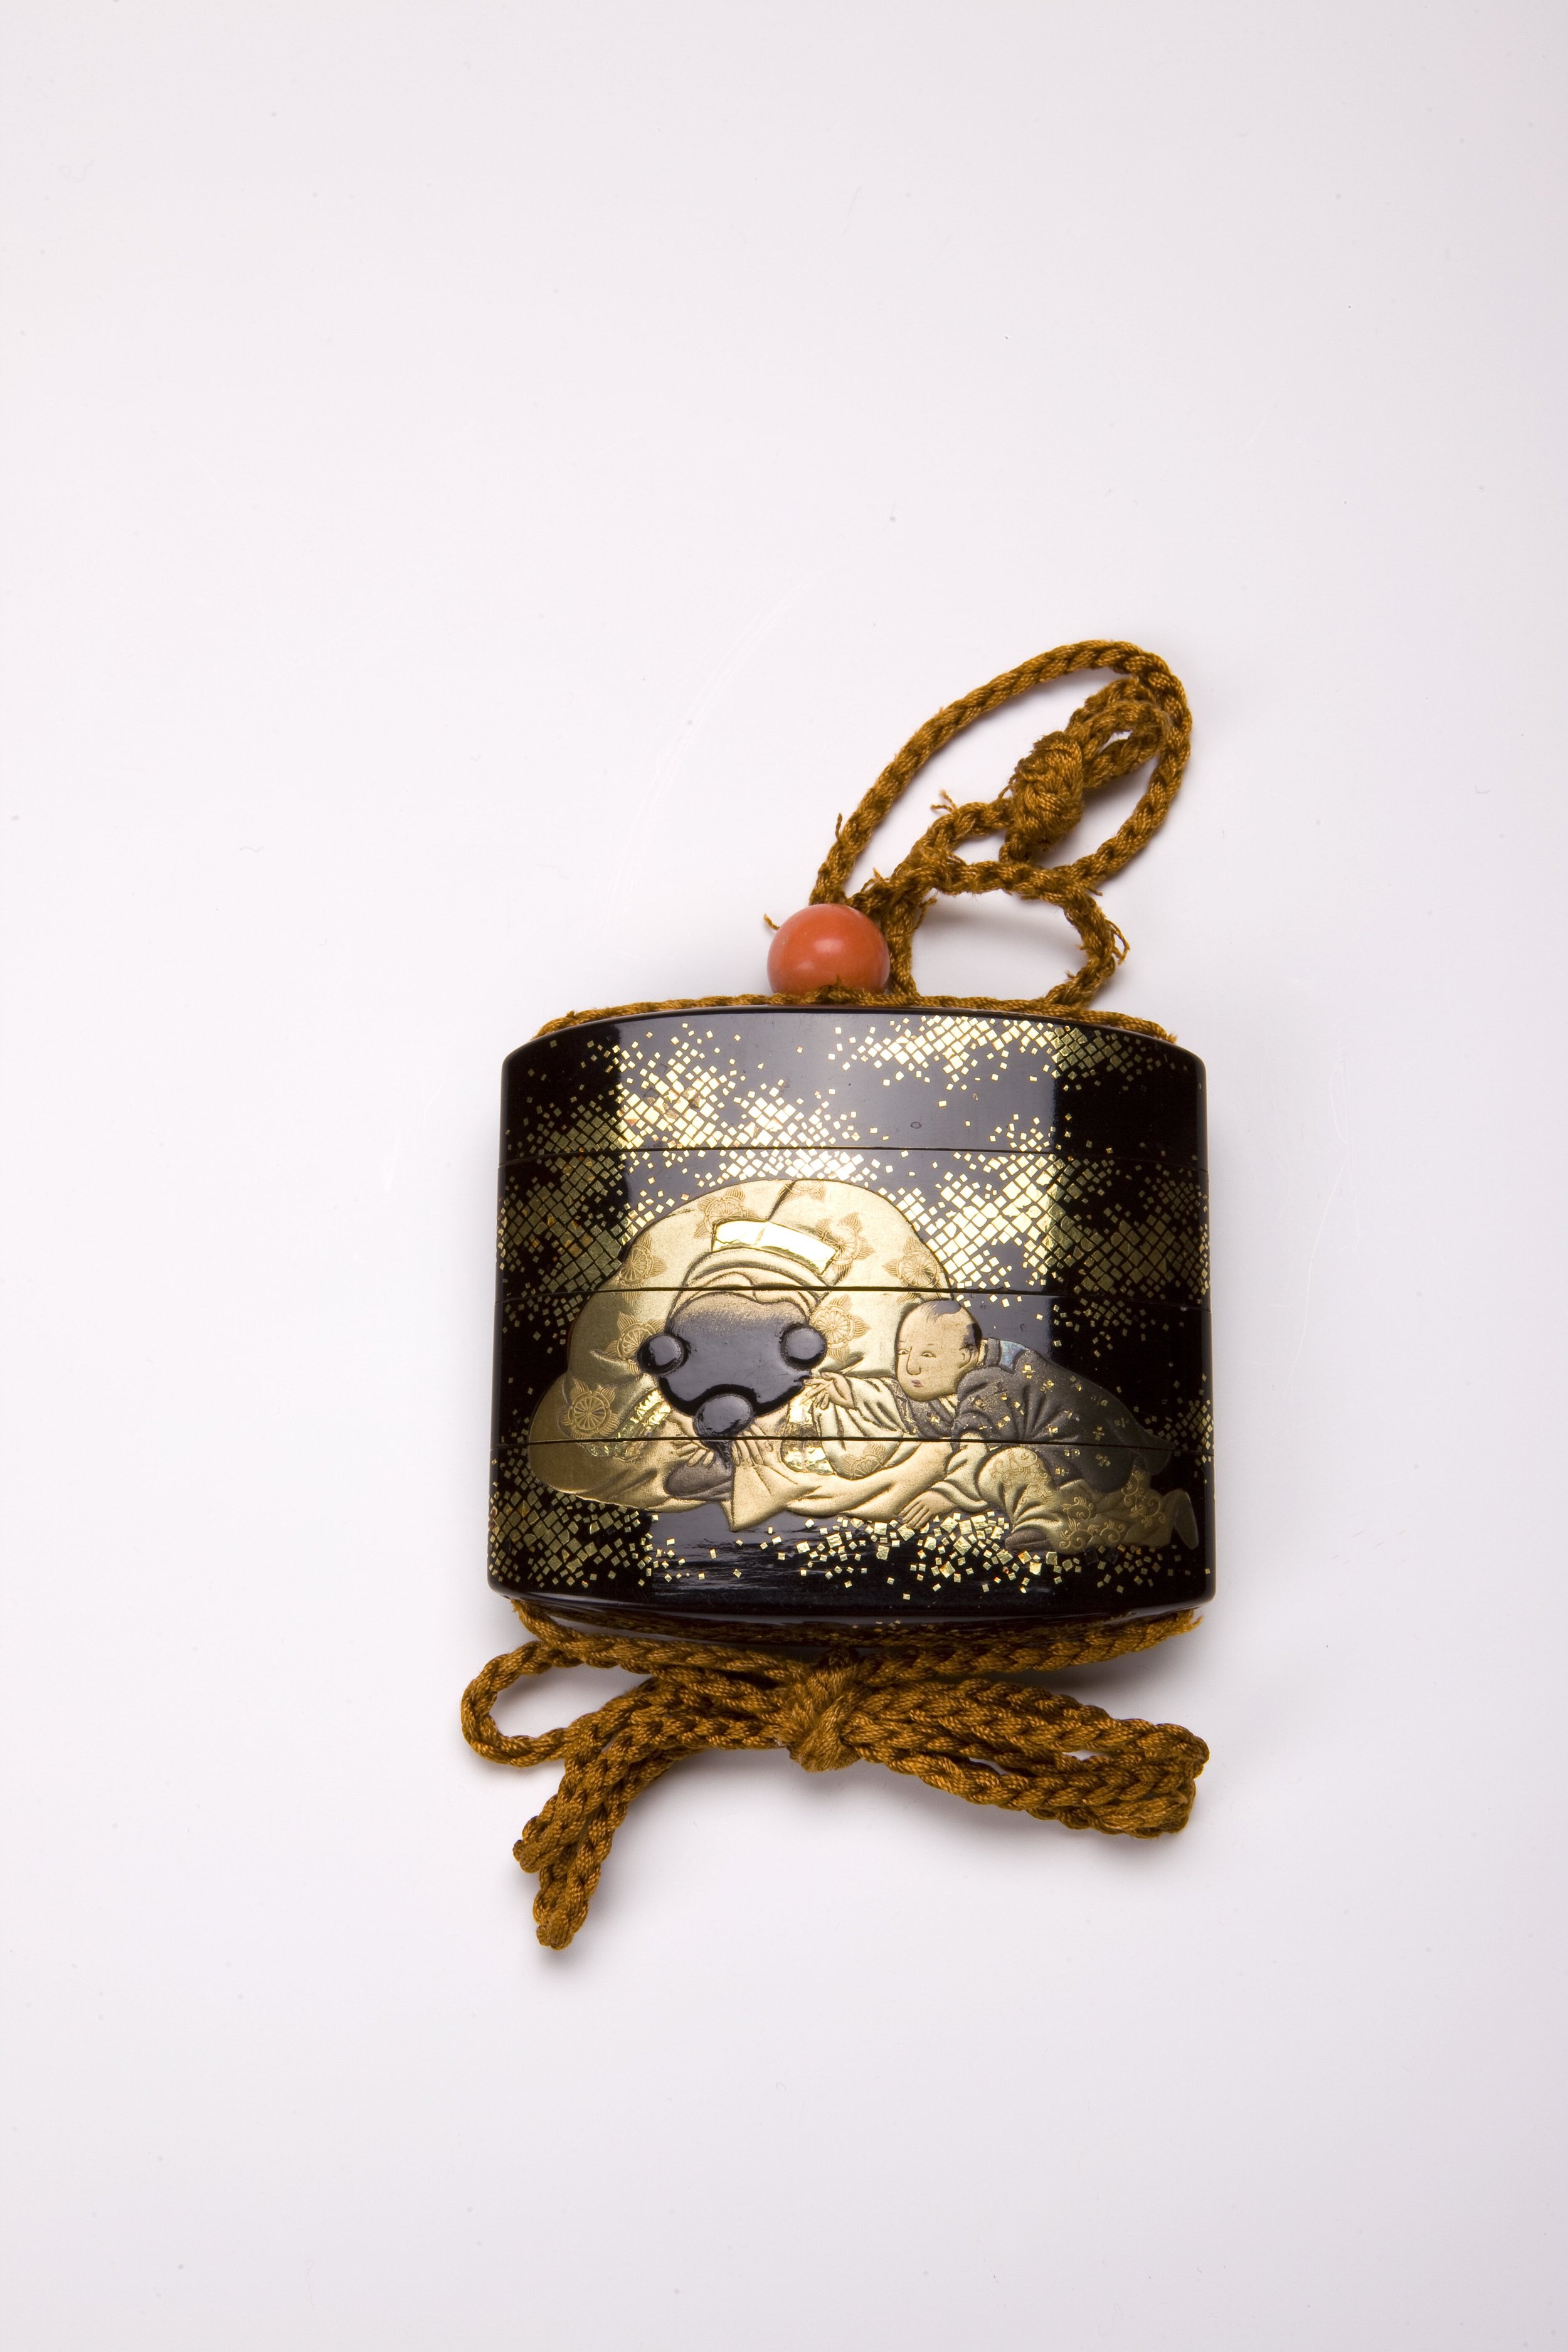  Koma Yasutada,  Karako Inro,  19th century. Maki-e gold lacquer on wood, 2½ x 2¾ inches ©Koma Yasutada, courtesy of Fou Gallery and Thomsen Gallery 